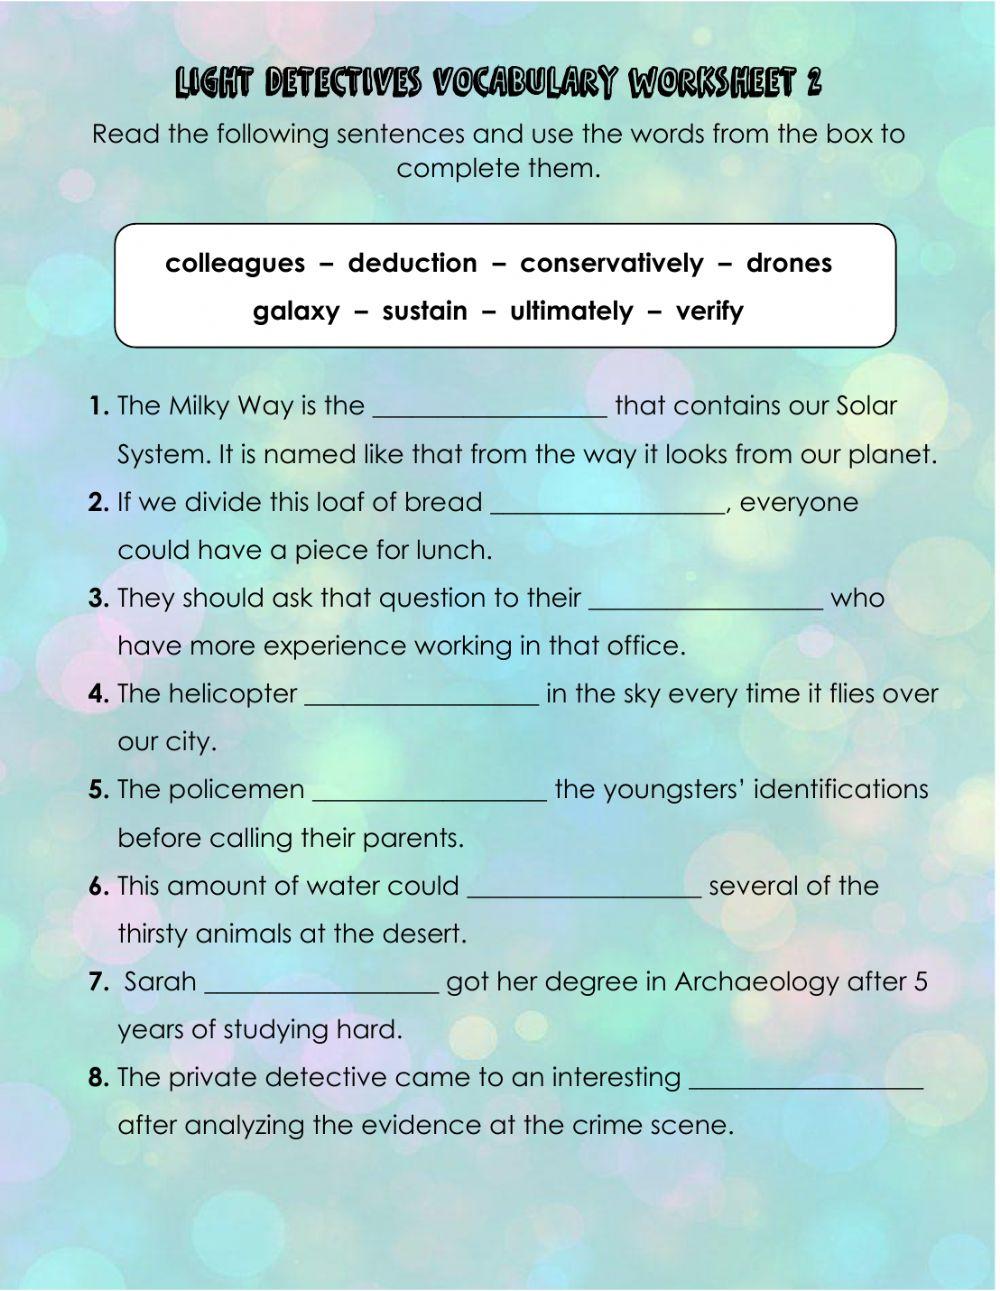 Light Detectives Vocabulary Worksheet 2